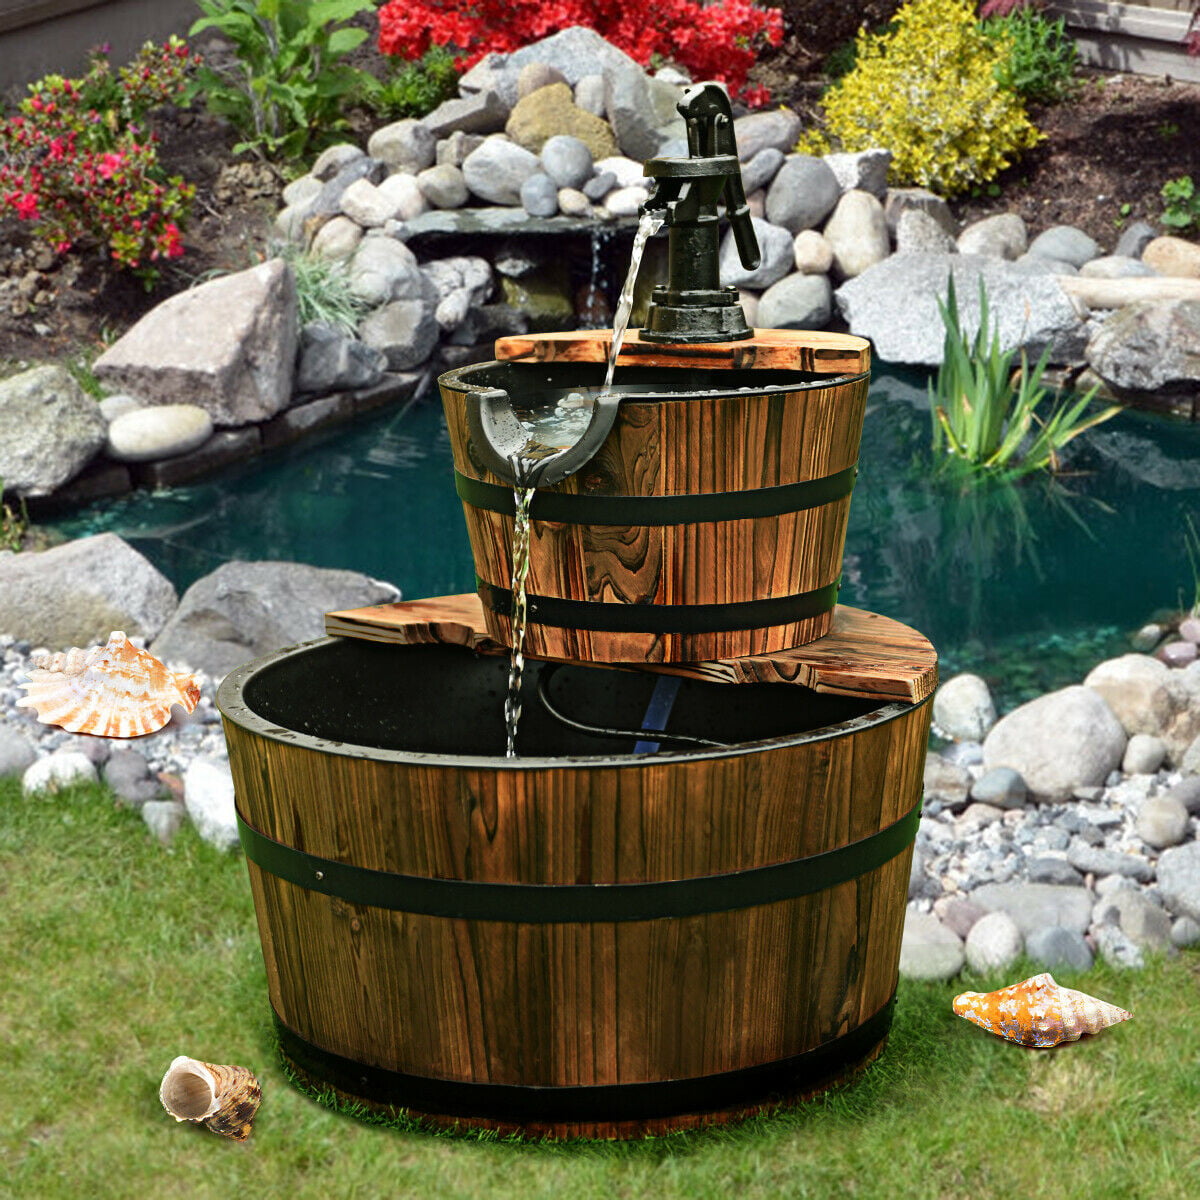 n-bright shop 2 Tier Fountain Pump Barrel Rustic Wood Water Fountain with Pump Traditional Garden Outdoor Decor 